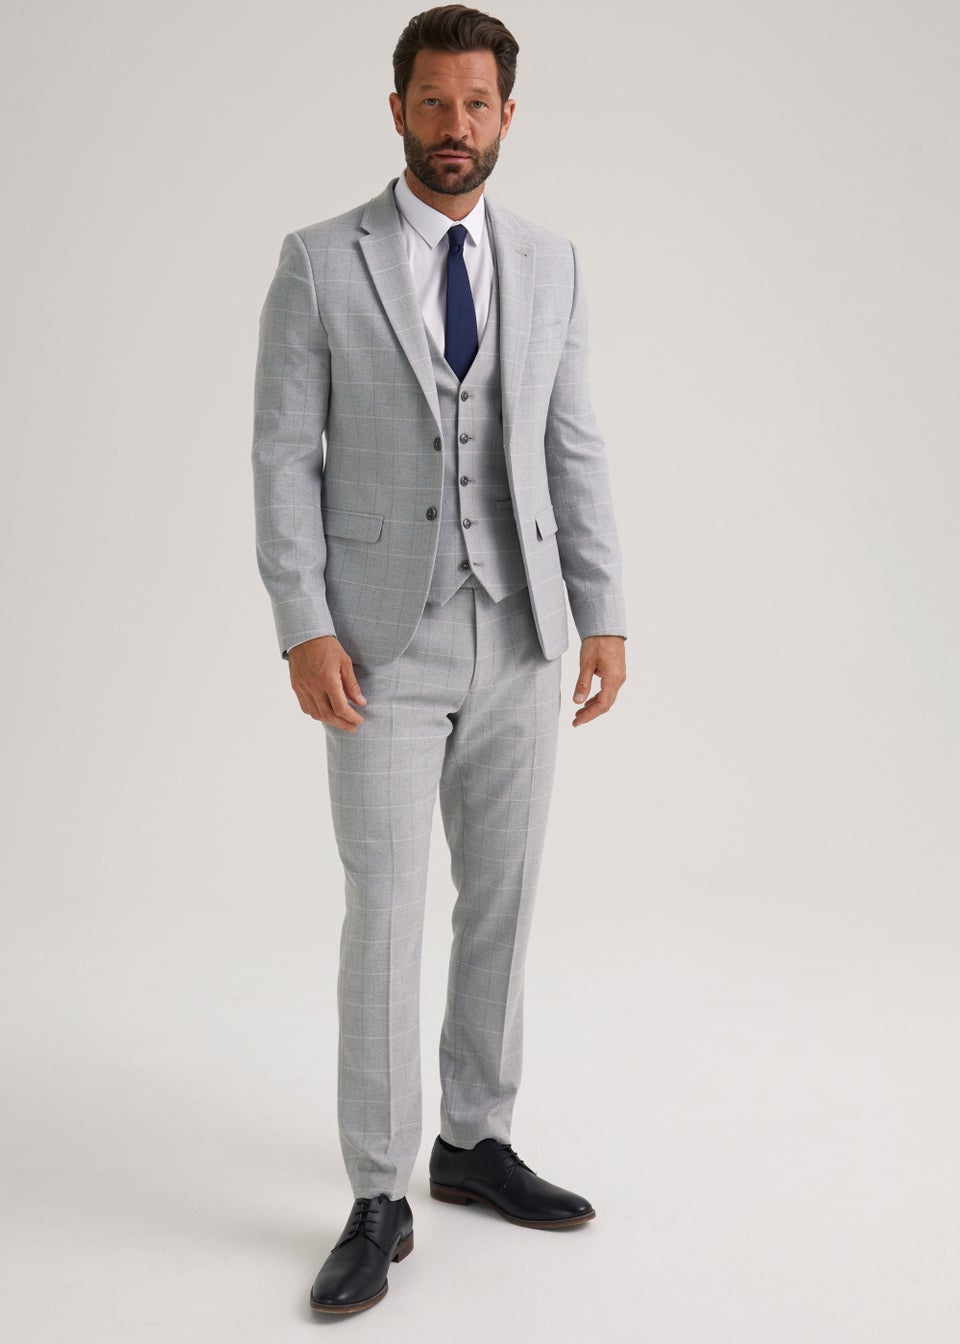 Taylor & Wright Grey Jackman Suit Waistcoat